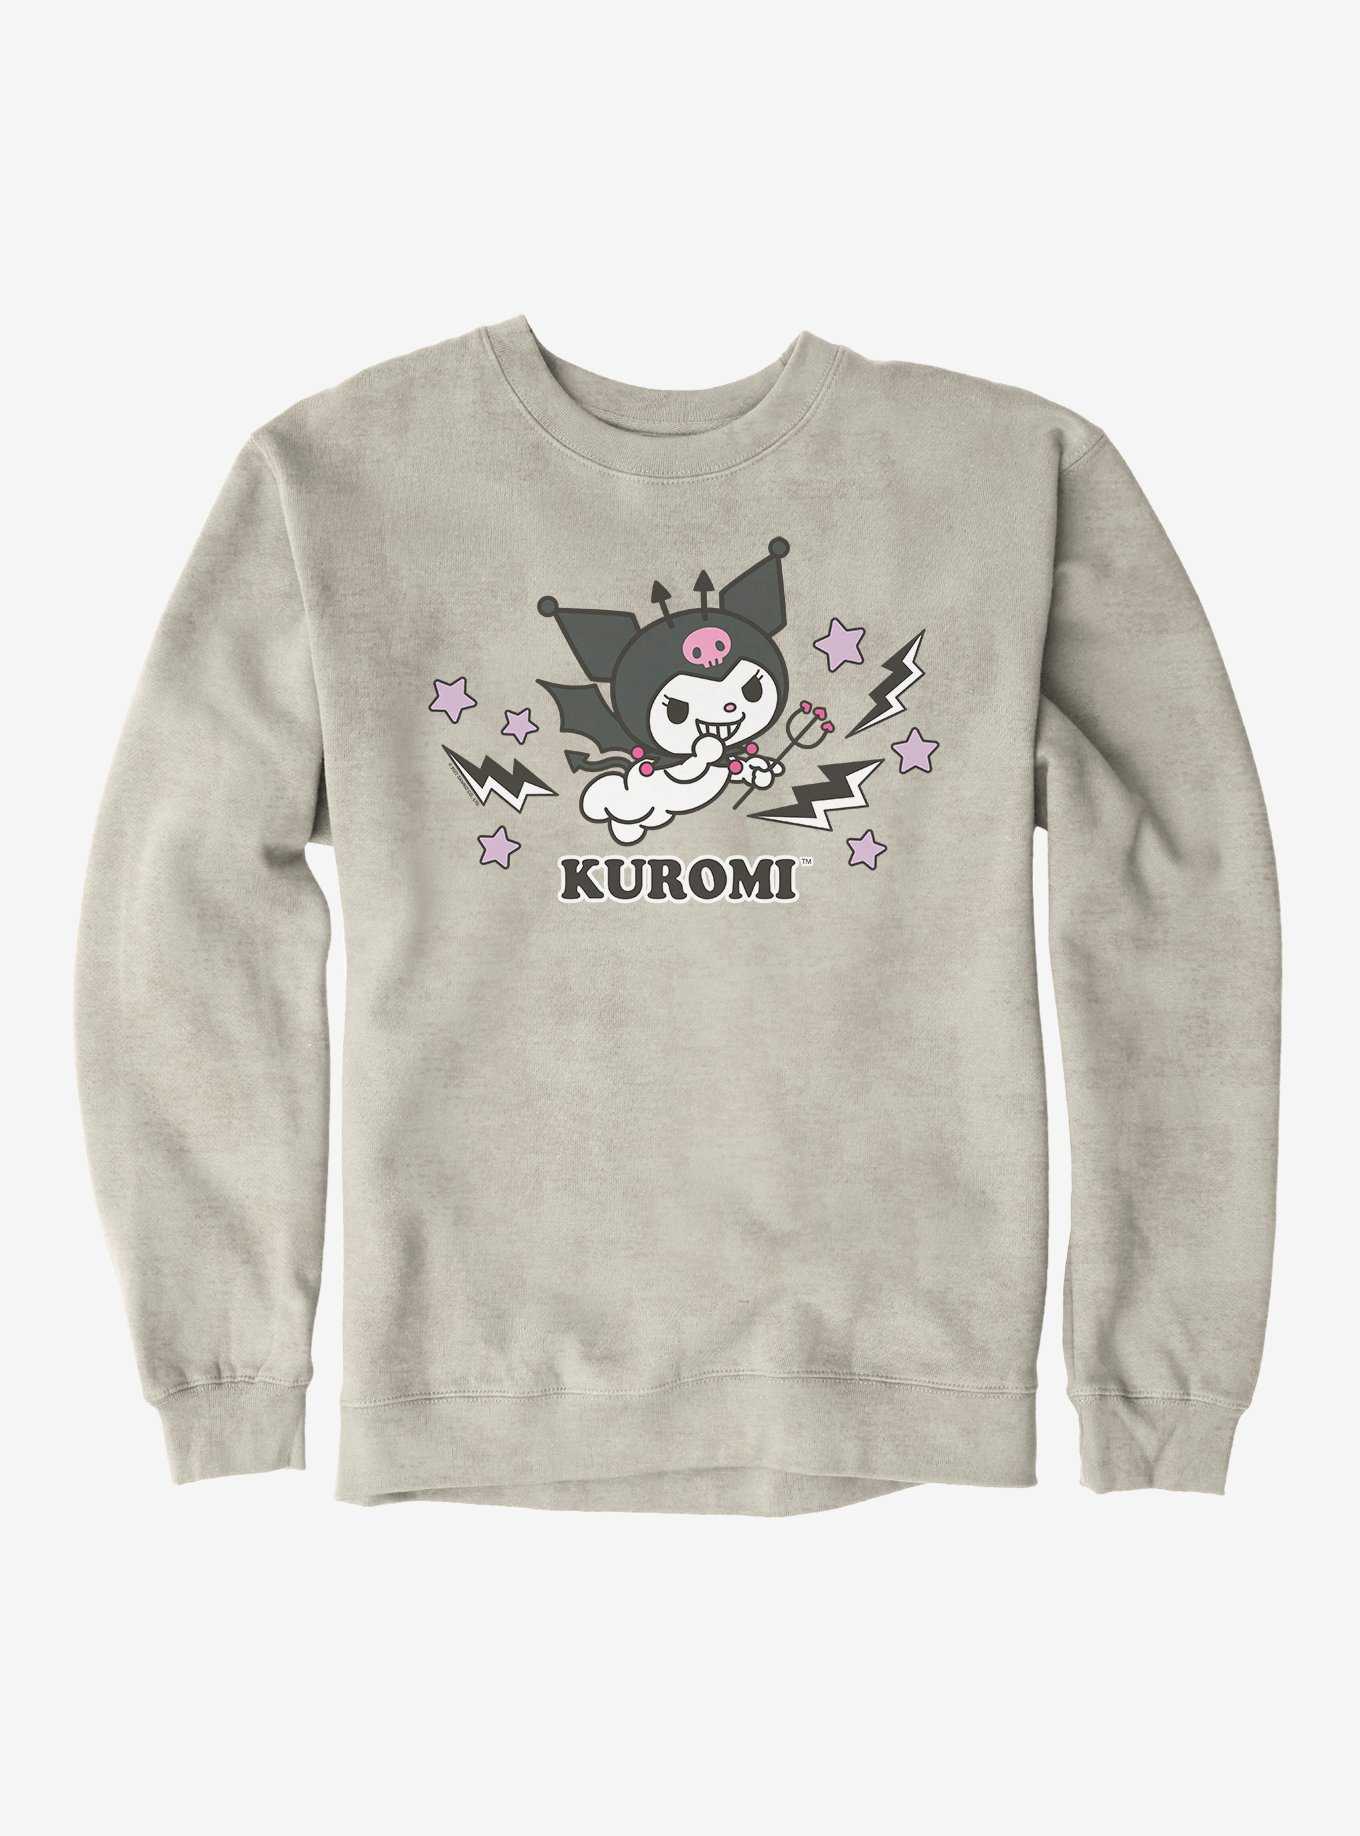 Kuromi Halloween Flying Sweatshirt, , hi-res